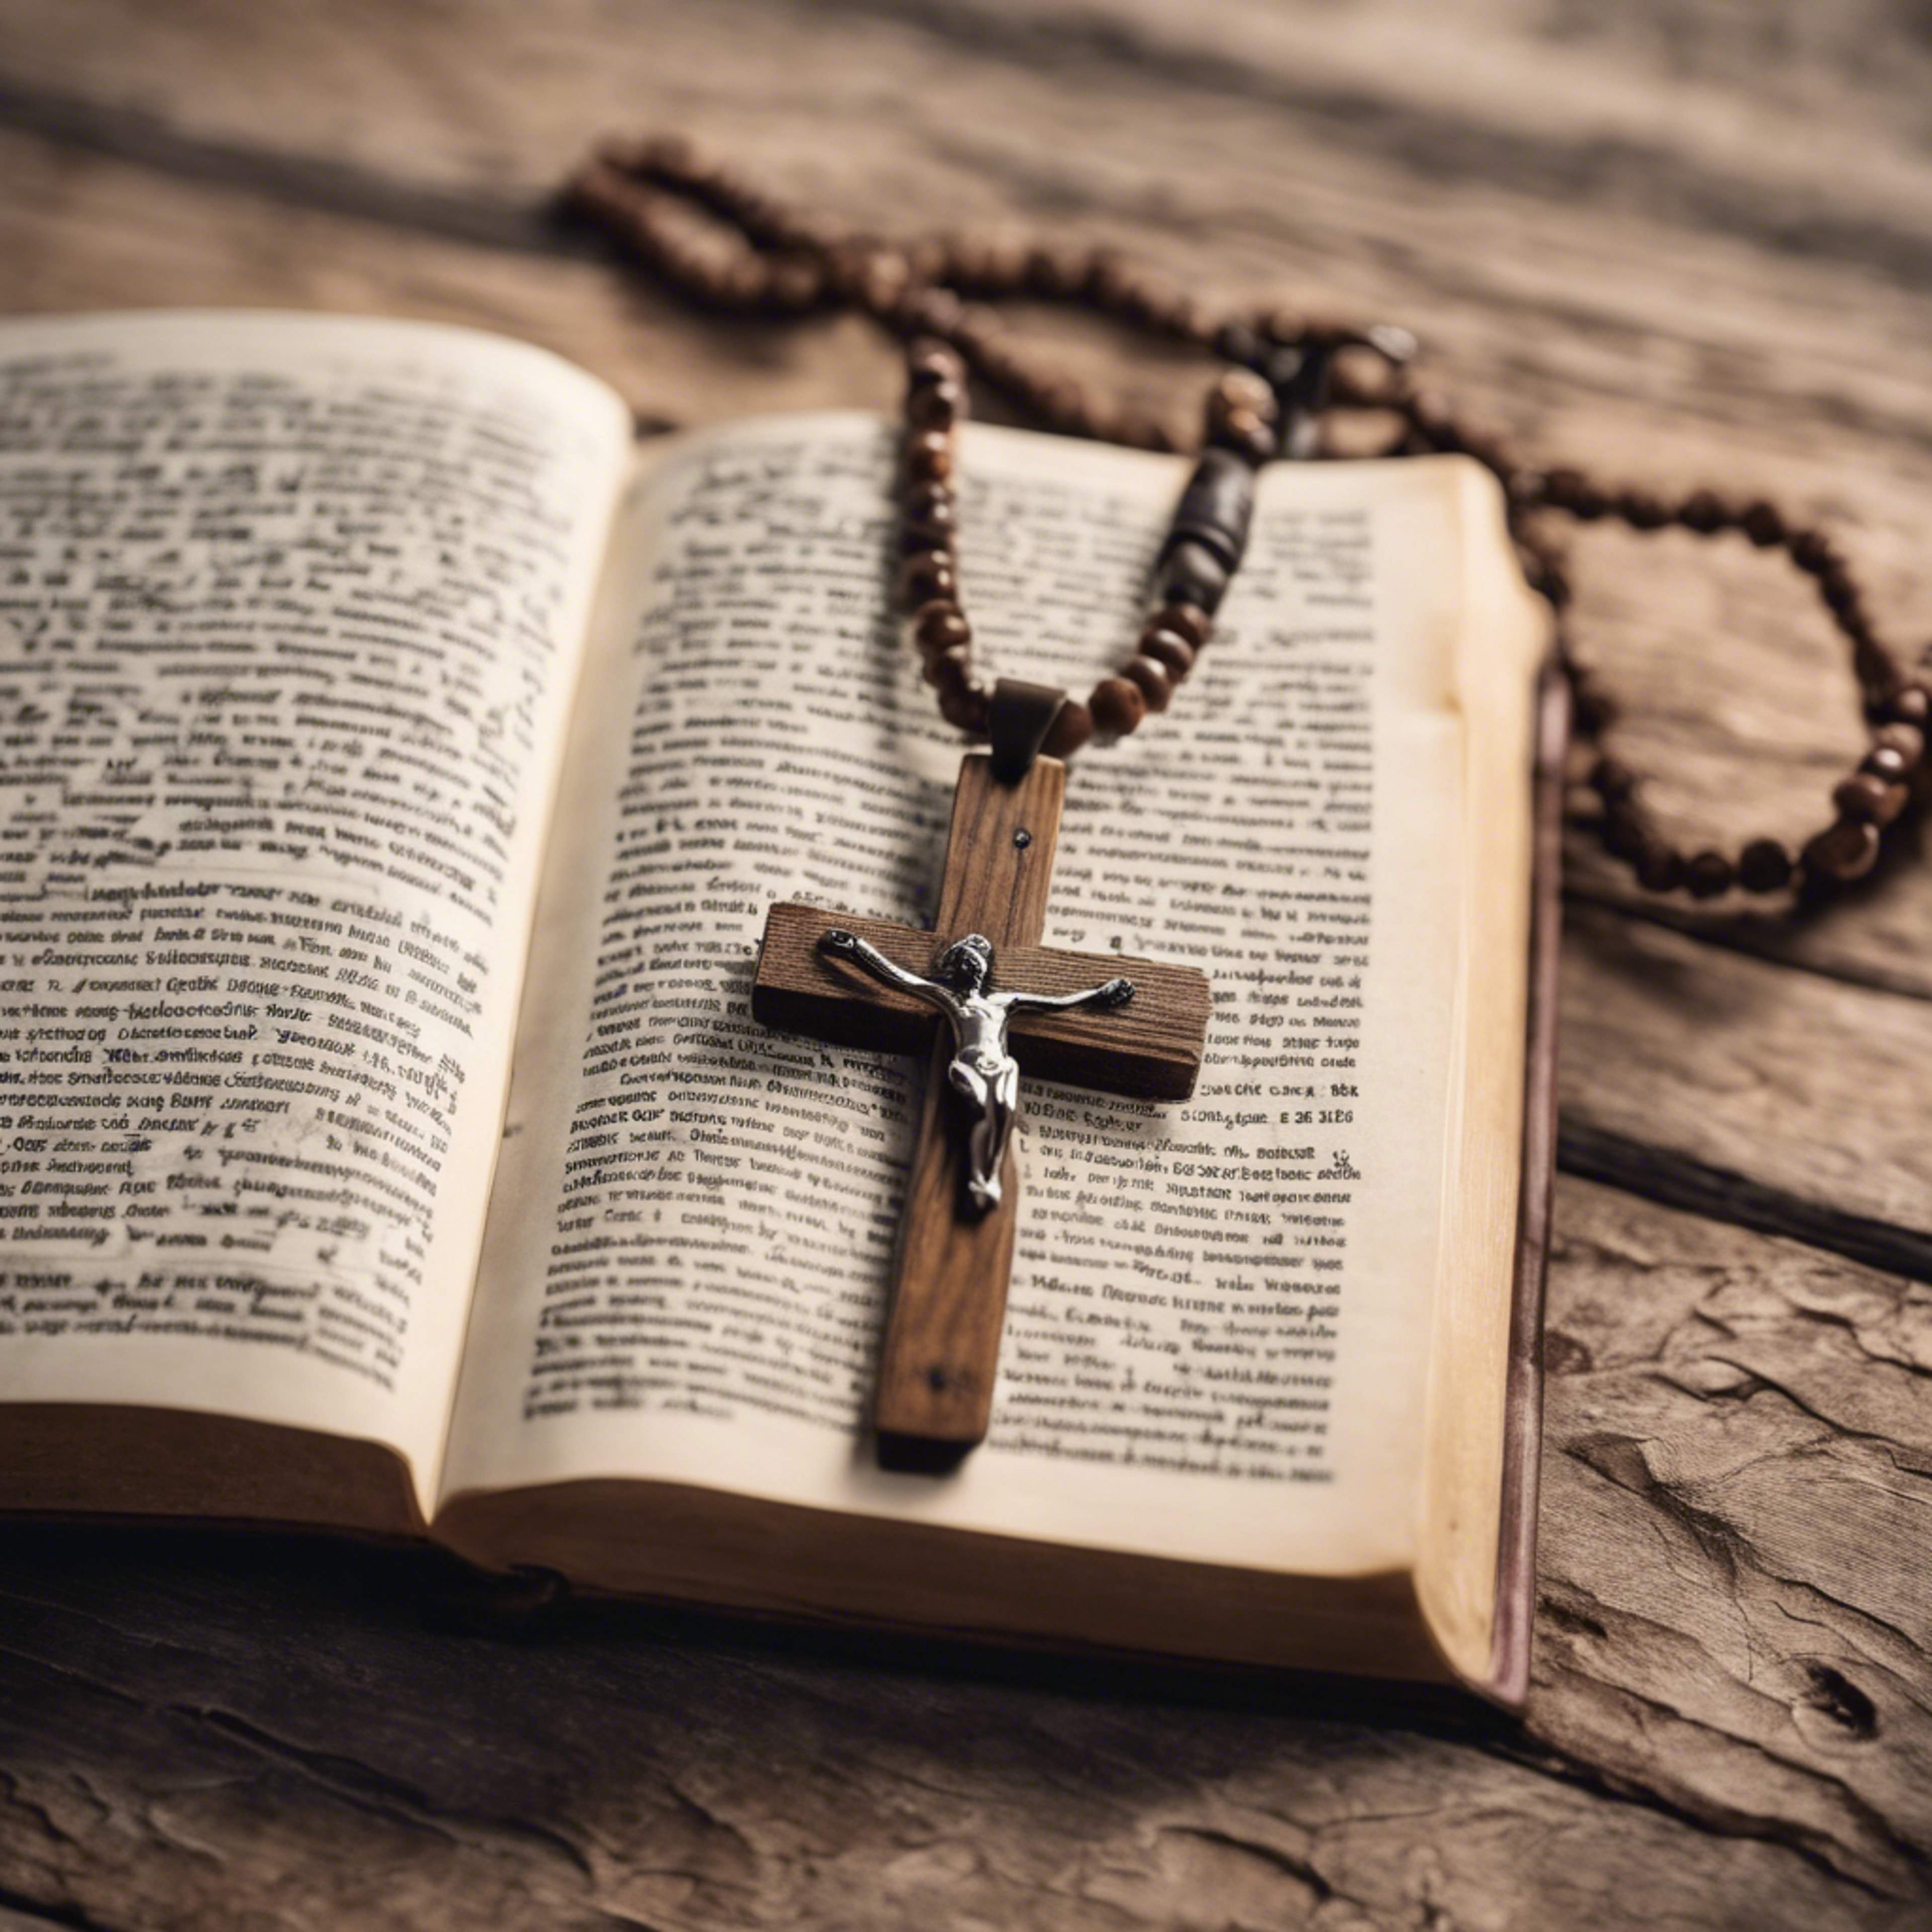 A rustic wooden cross pendant, resting on an open Bible with highlighted verses. Papel de parede[546e5e84b1254317a8cf]